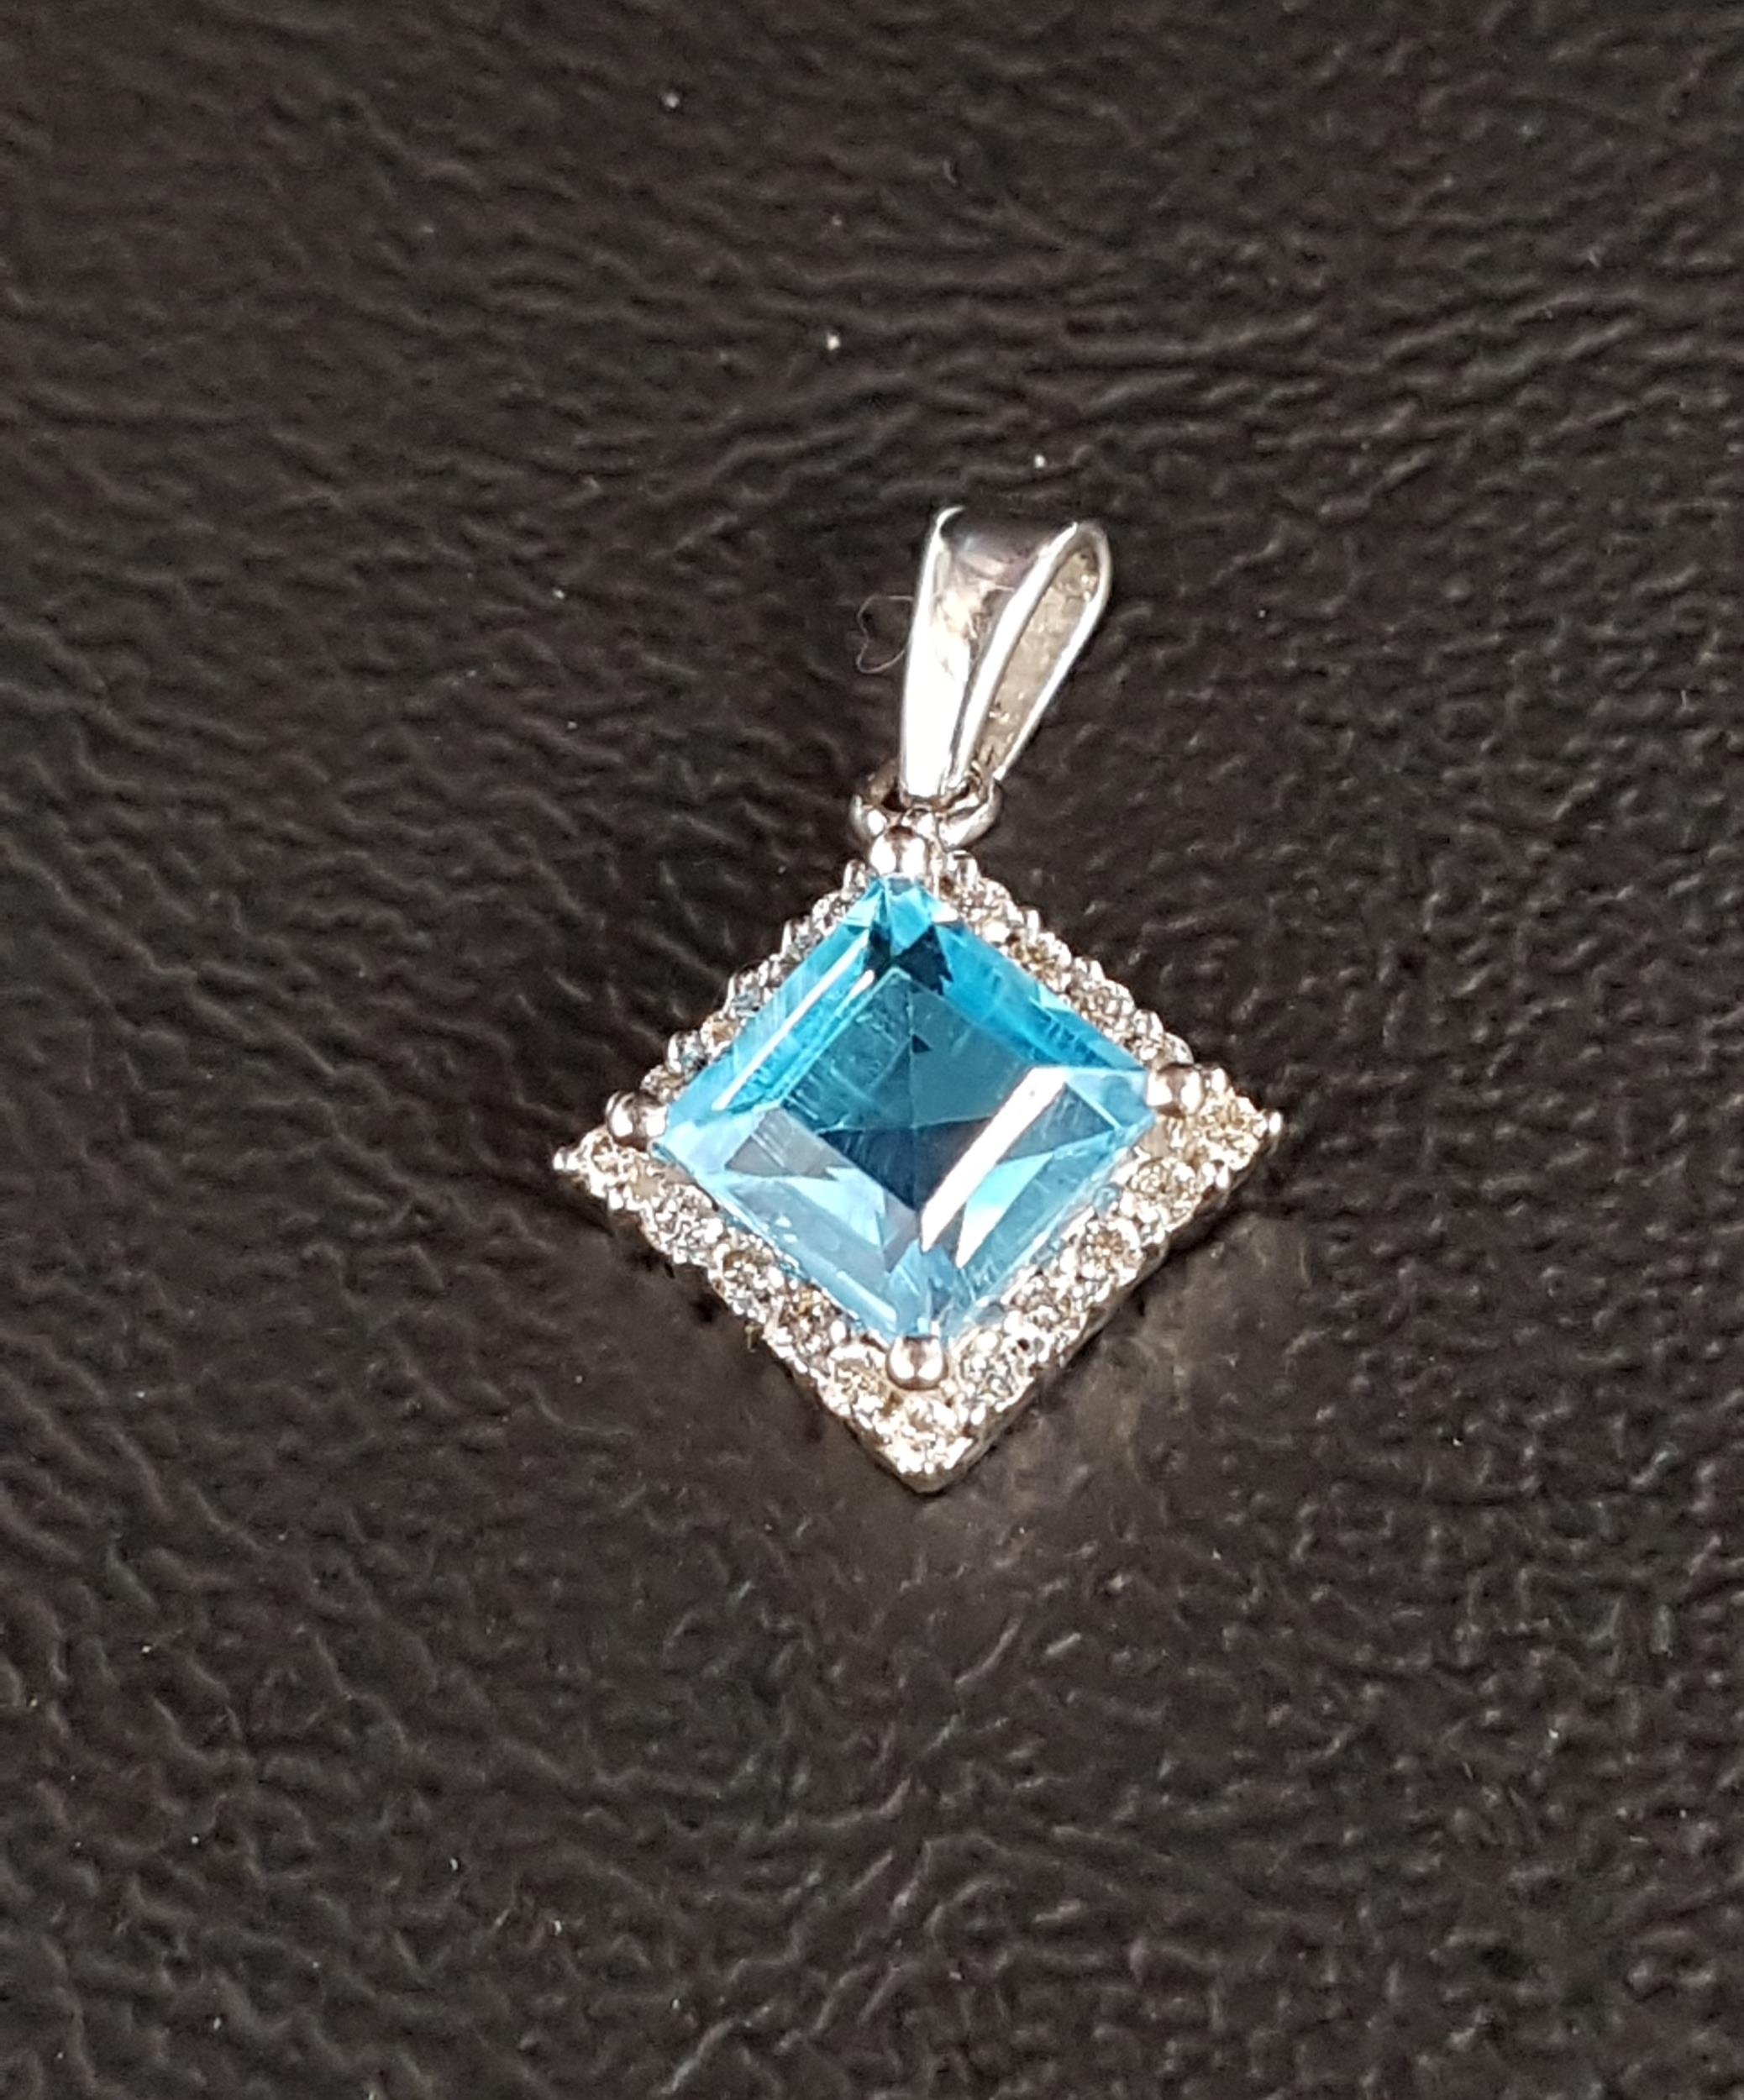 BLUE TOPAZ AND DIAMOND CLUSTER PENDANT the central square cut blue topaz in diamond surround